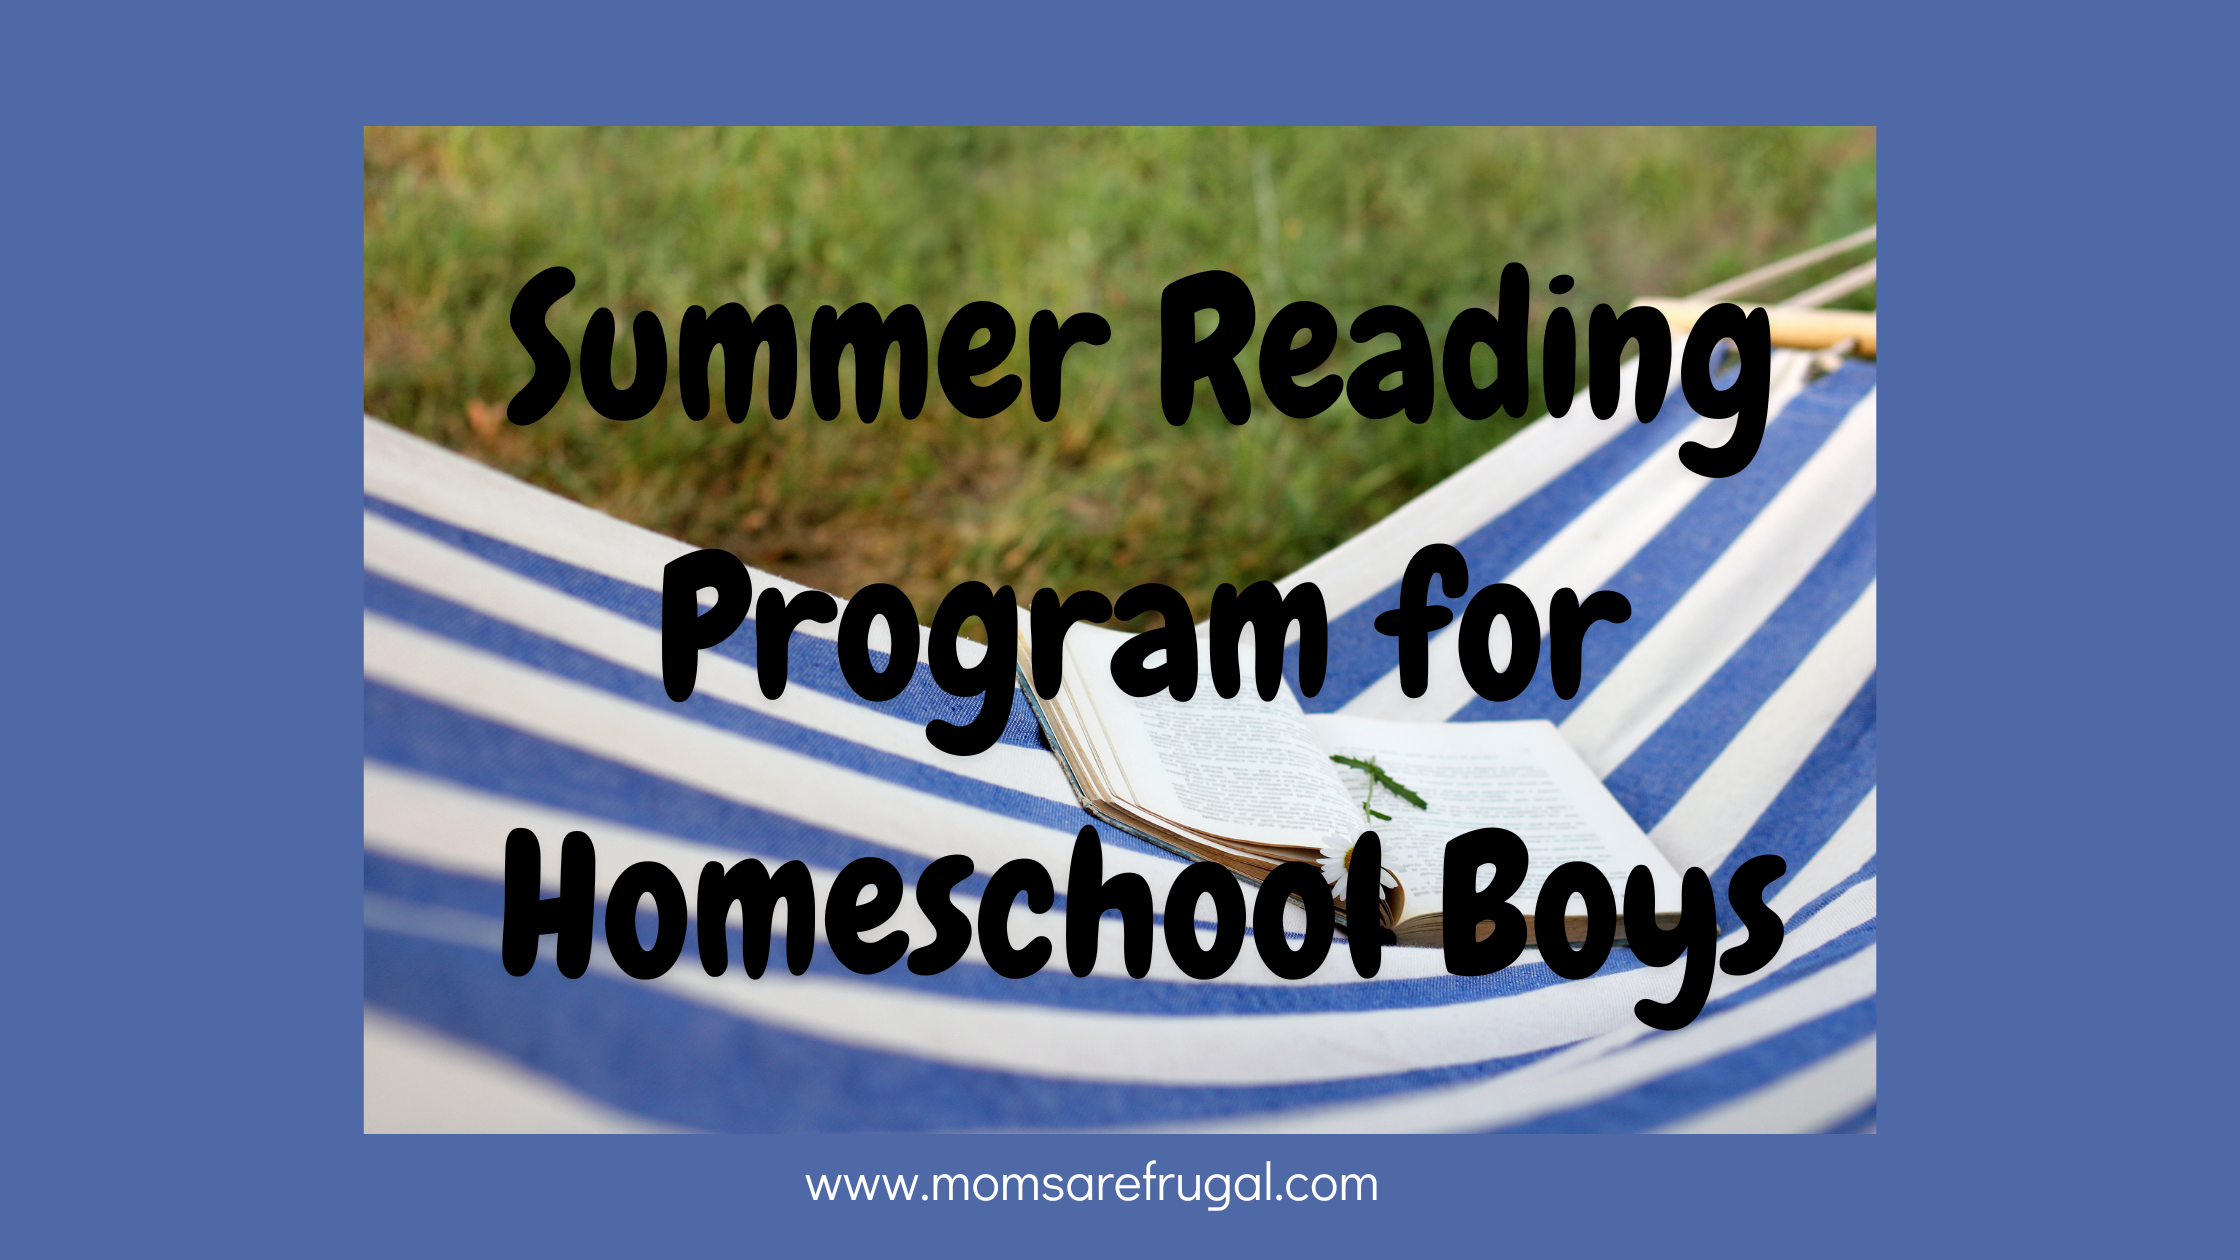 Summer Reading Program for Homeschool Boys